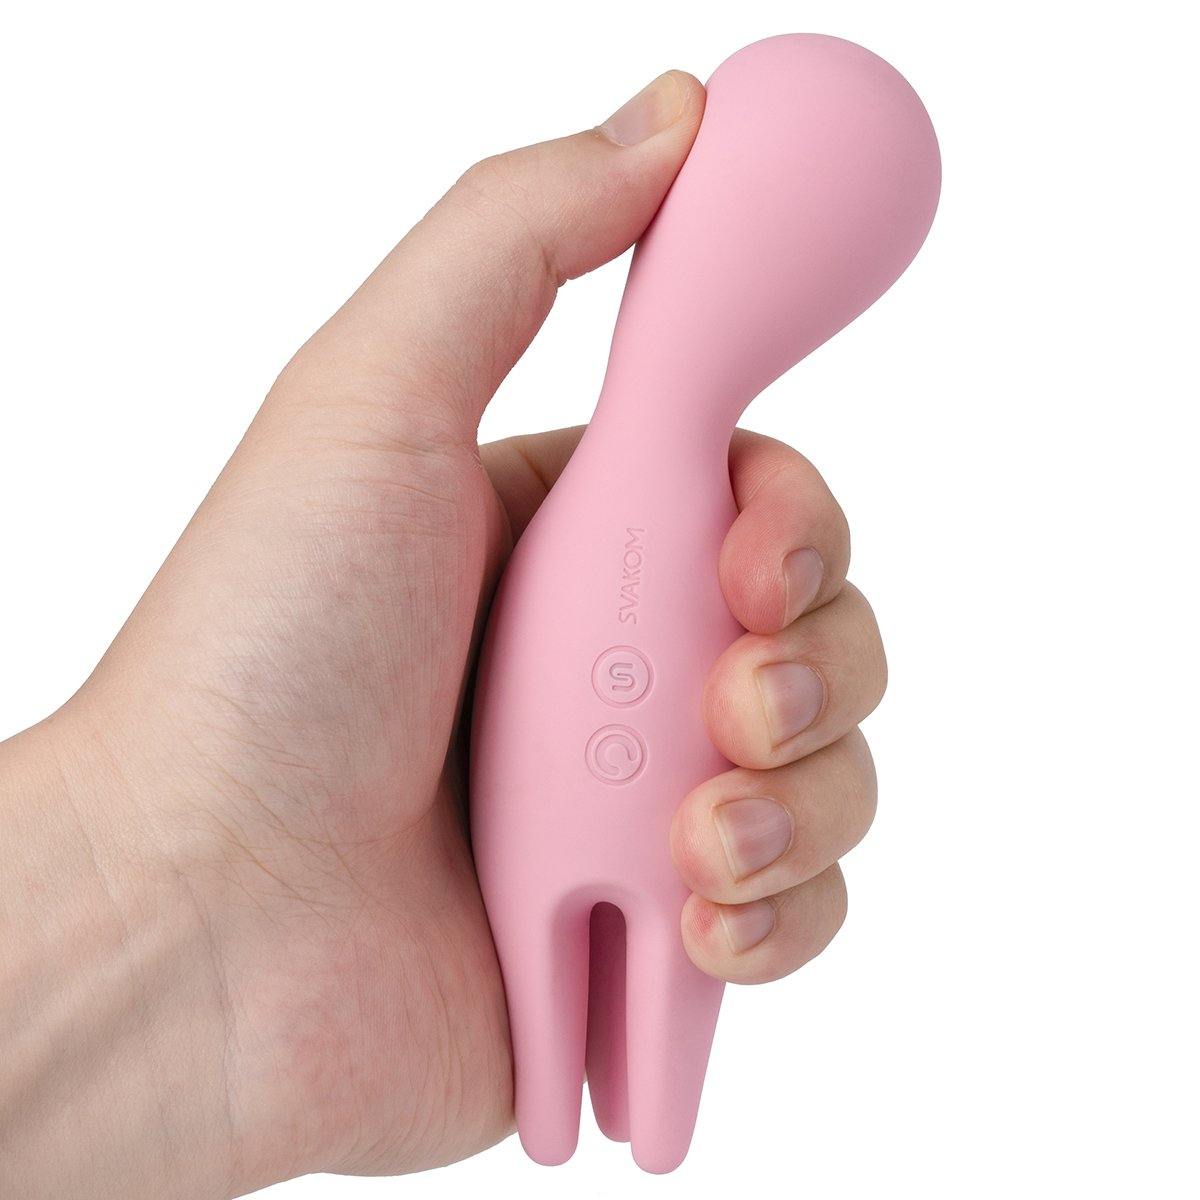 Nymph vibrator pink